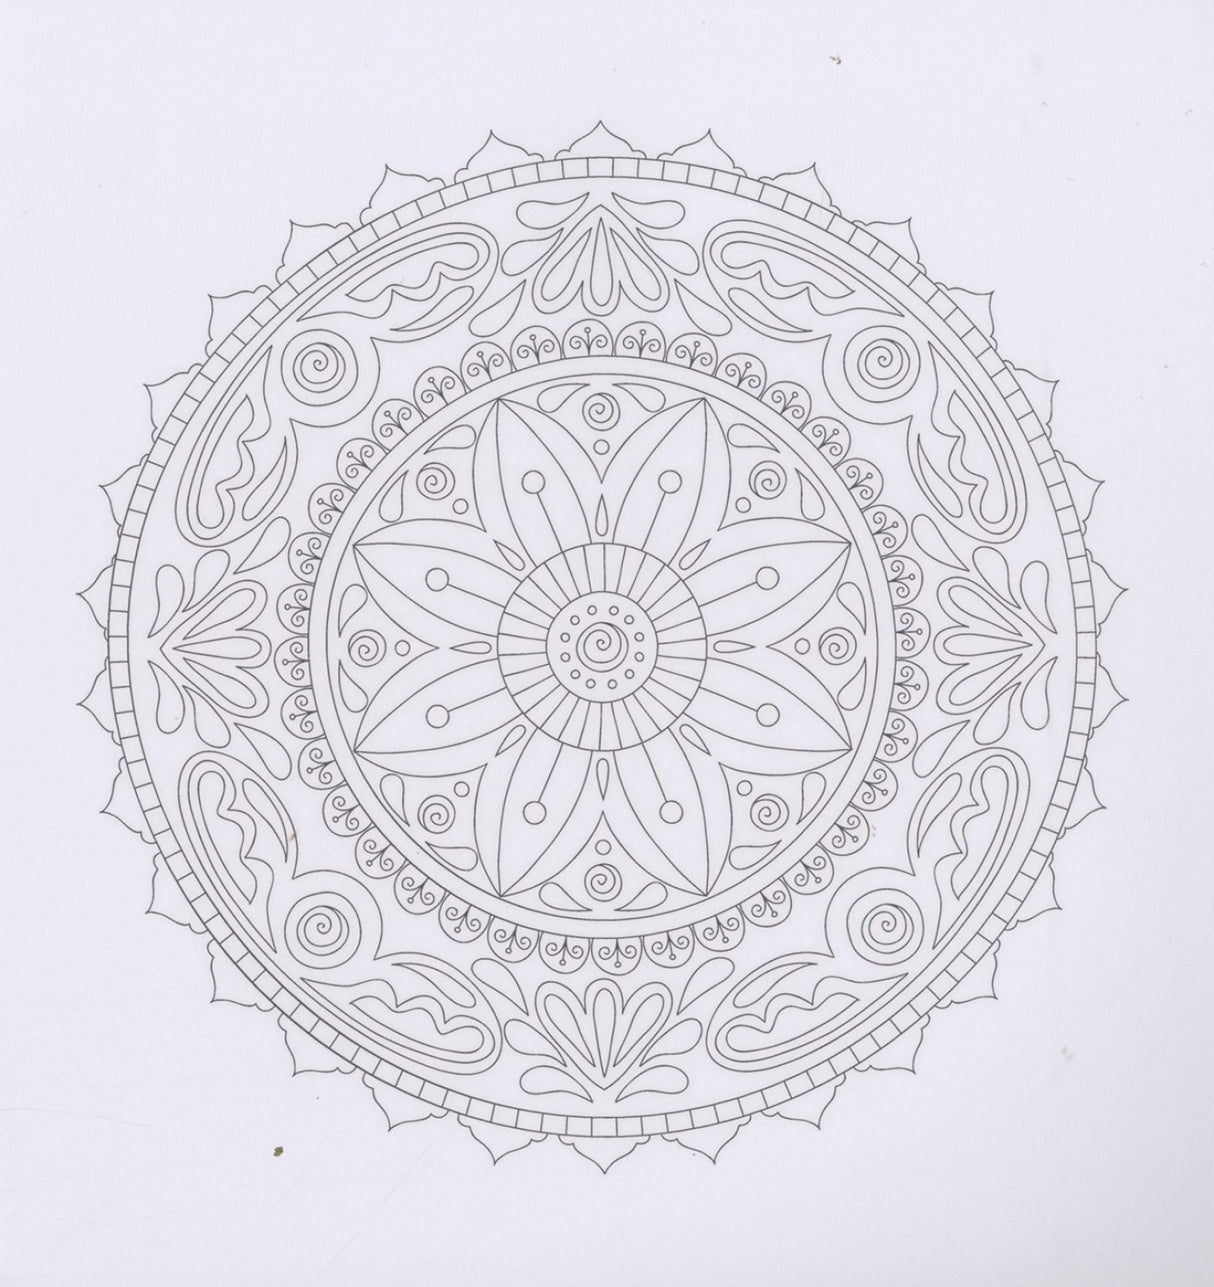 Embroidered Mandalas